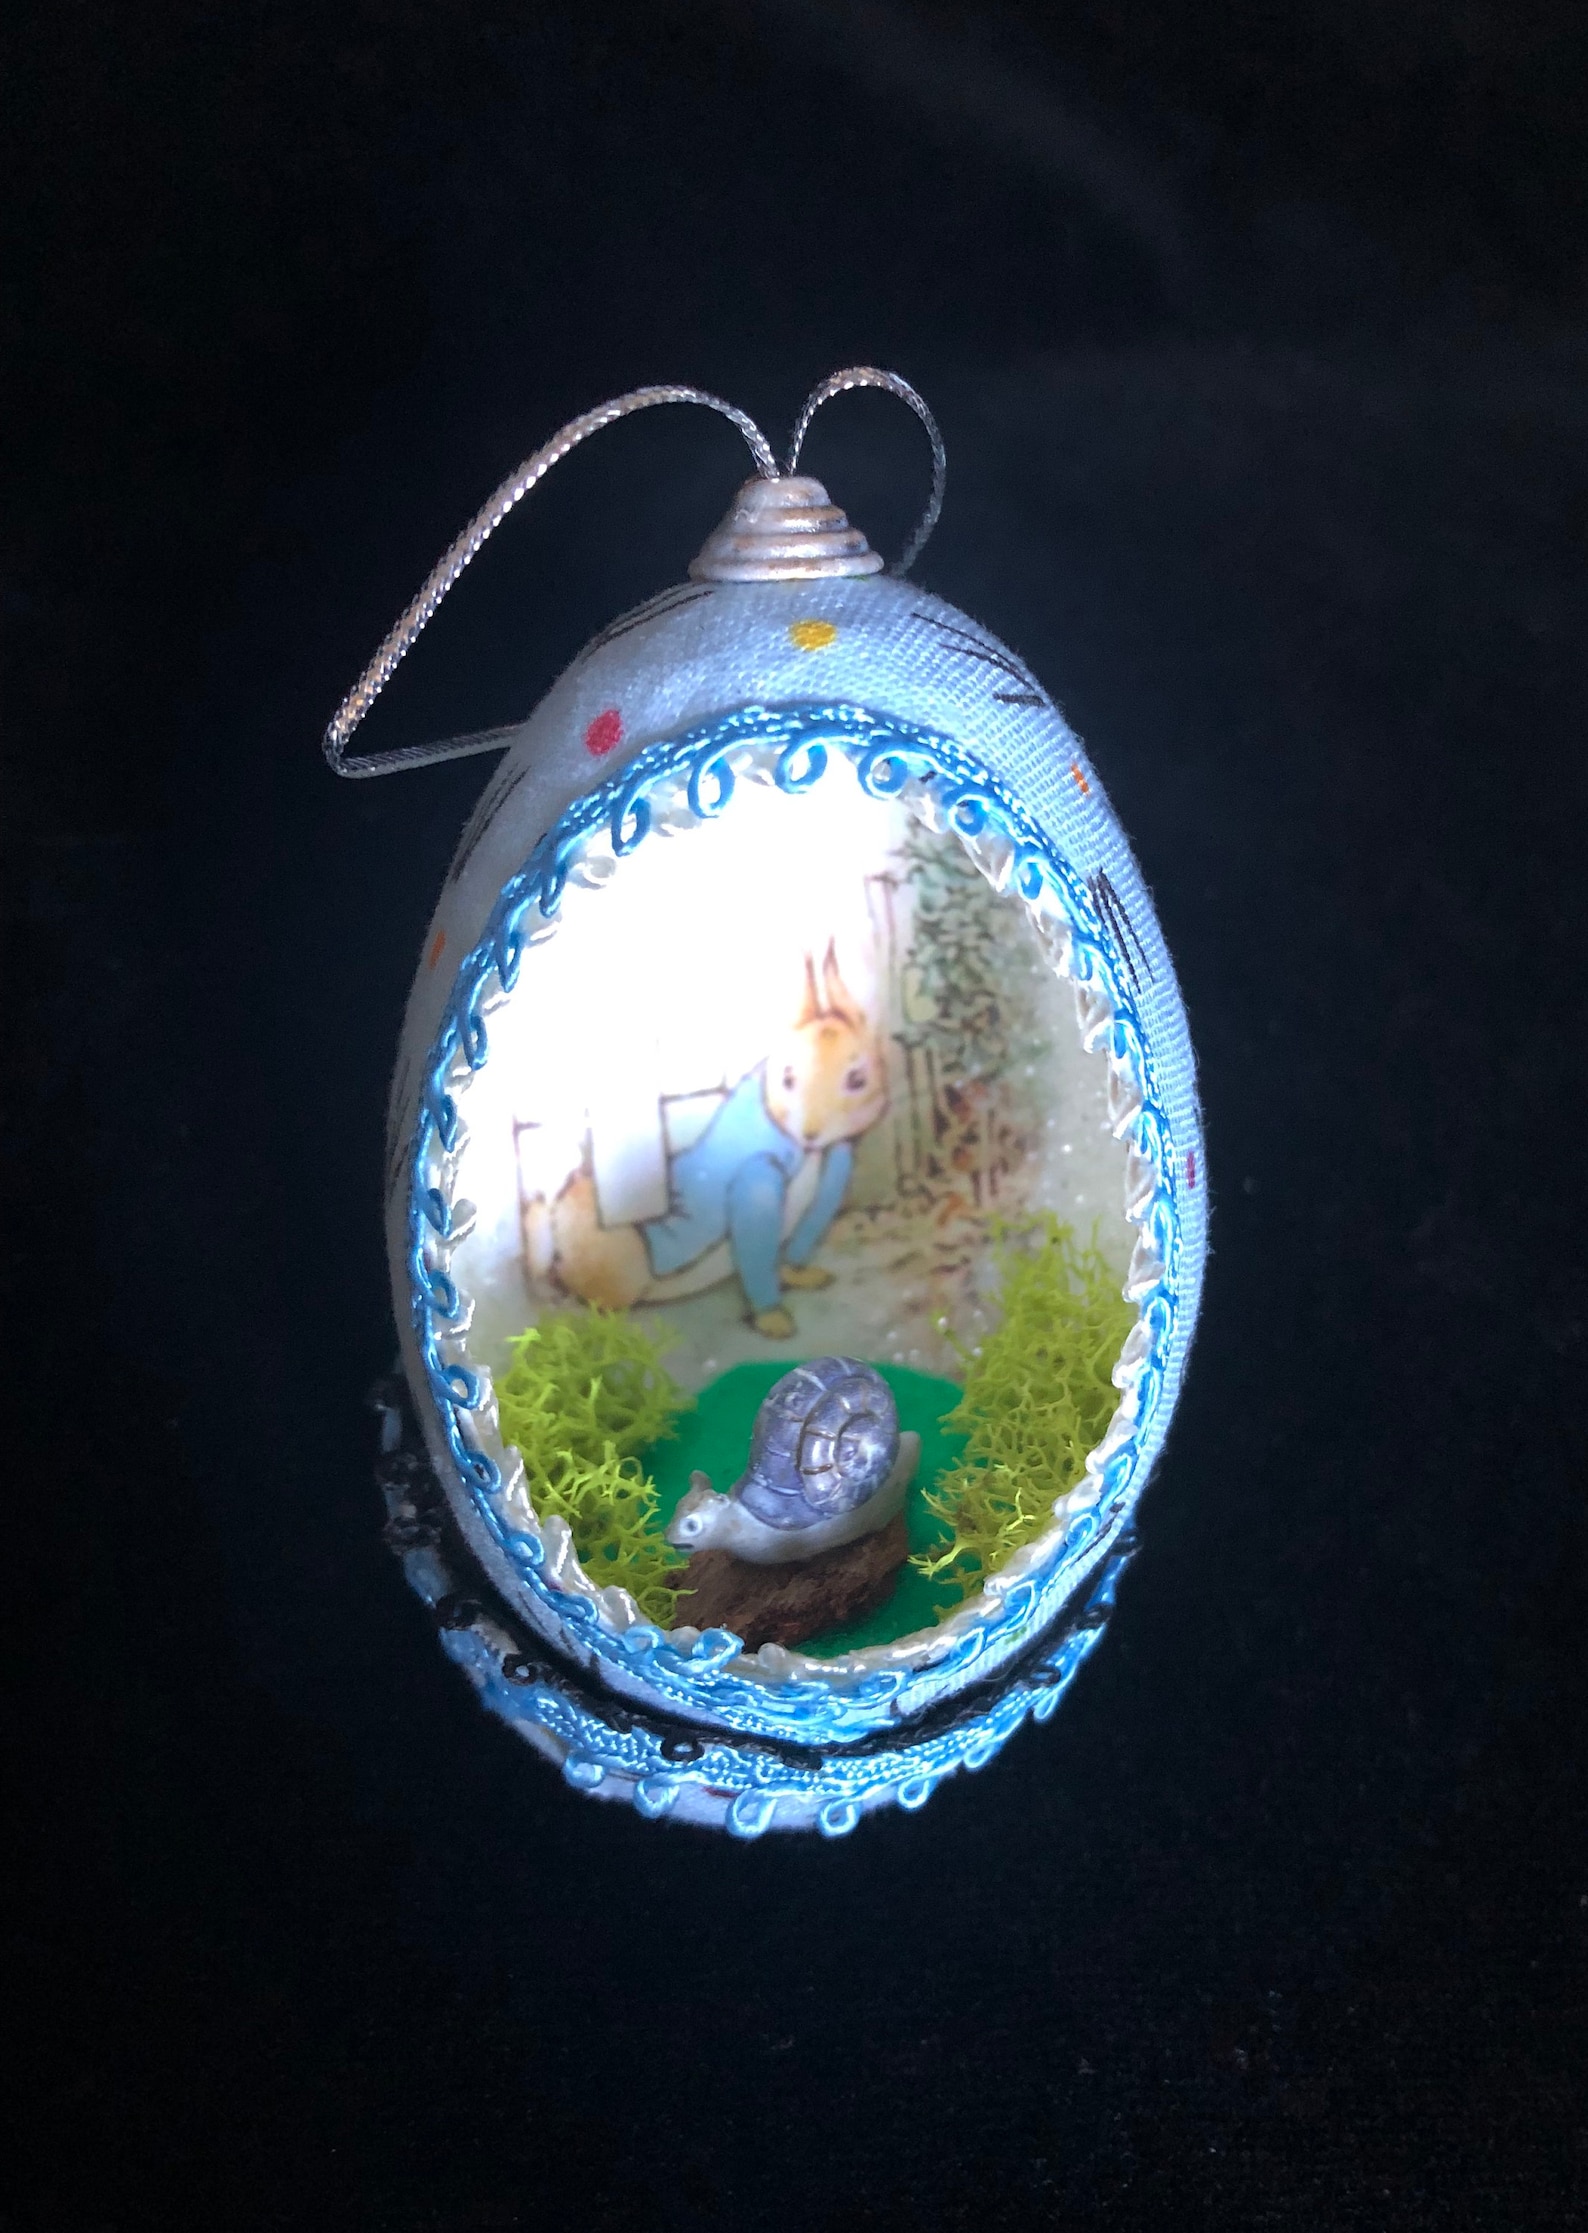 Peter Rabbit in Mr. Mcgregor's Garden Real Egg Ornament - Etsy